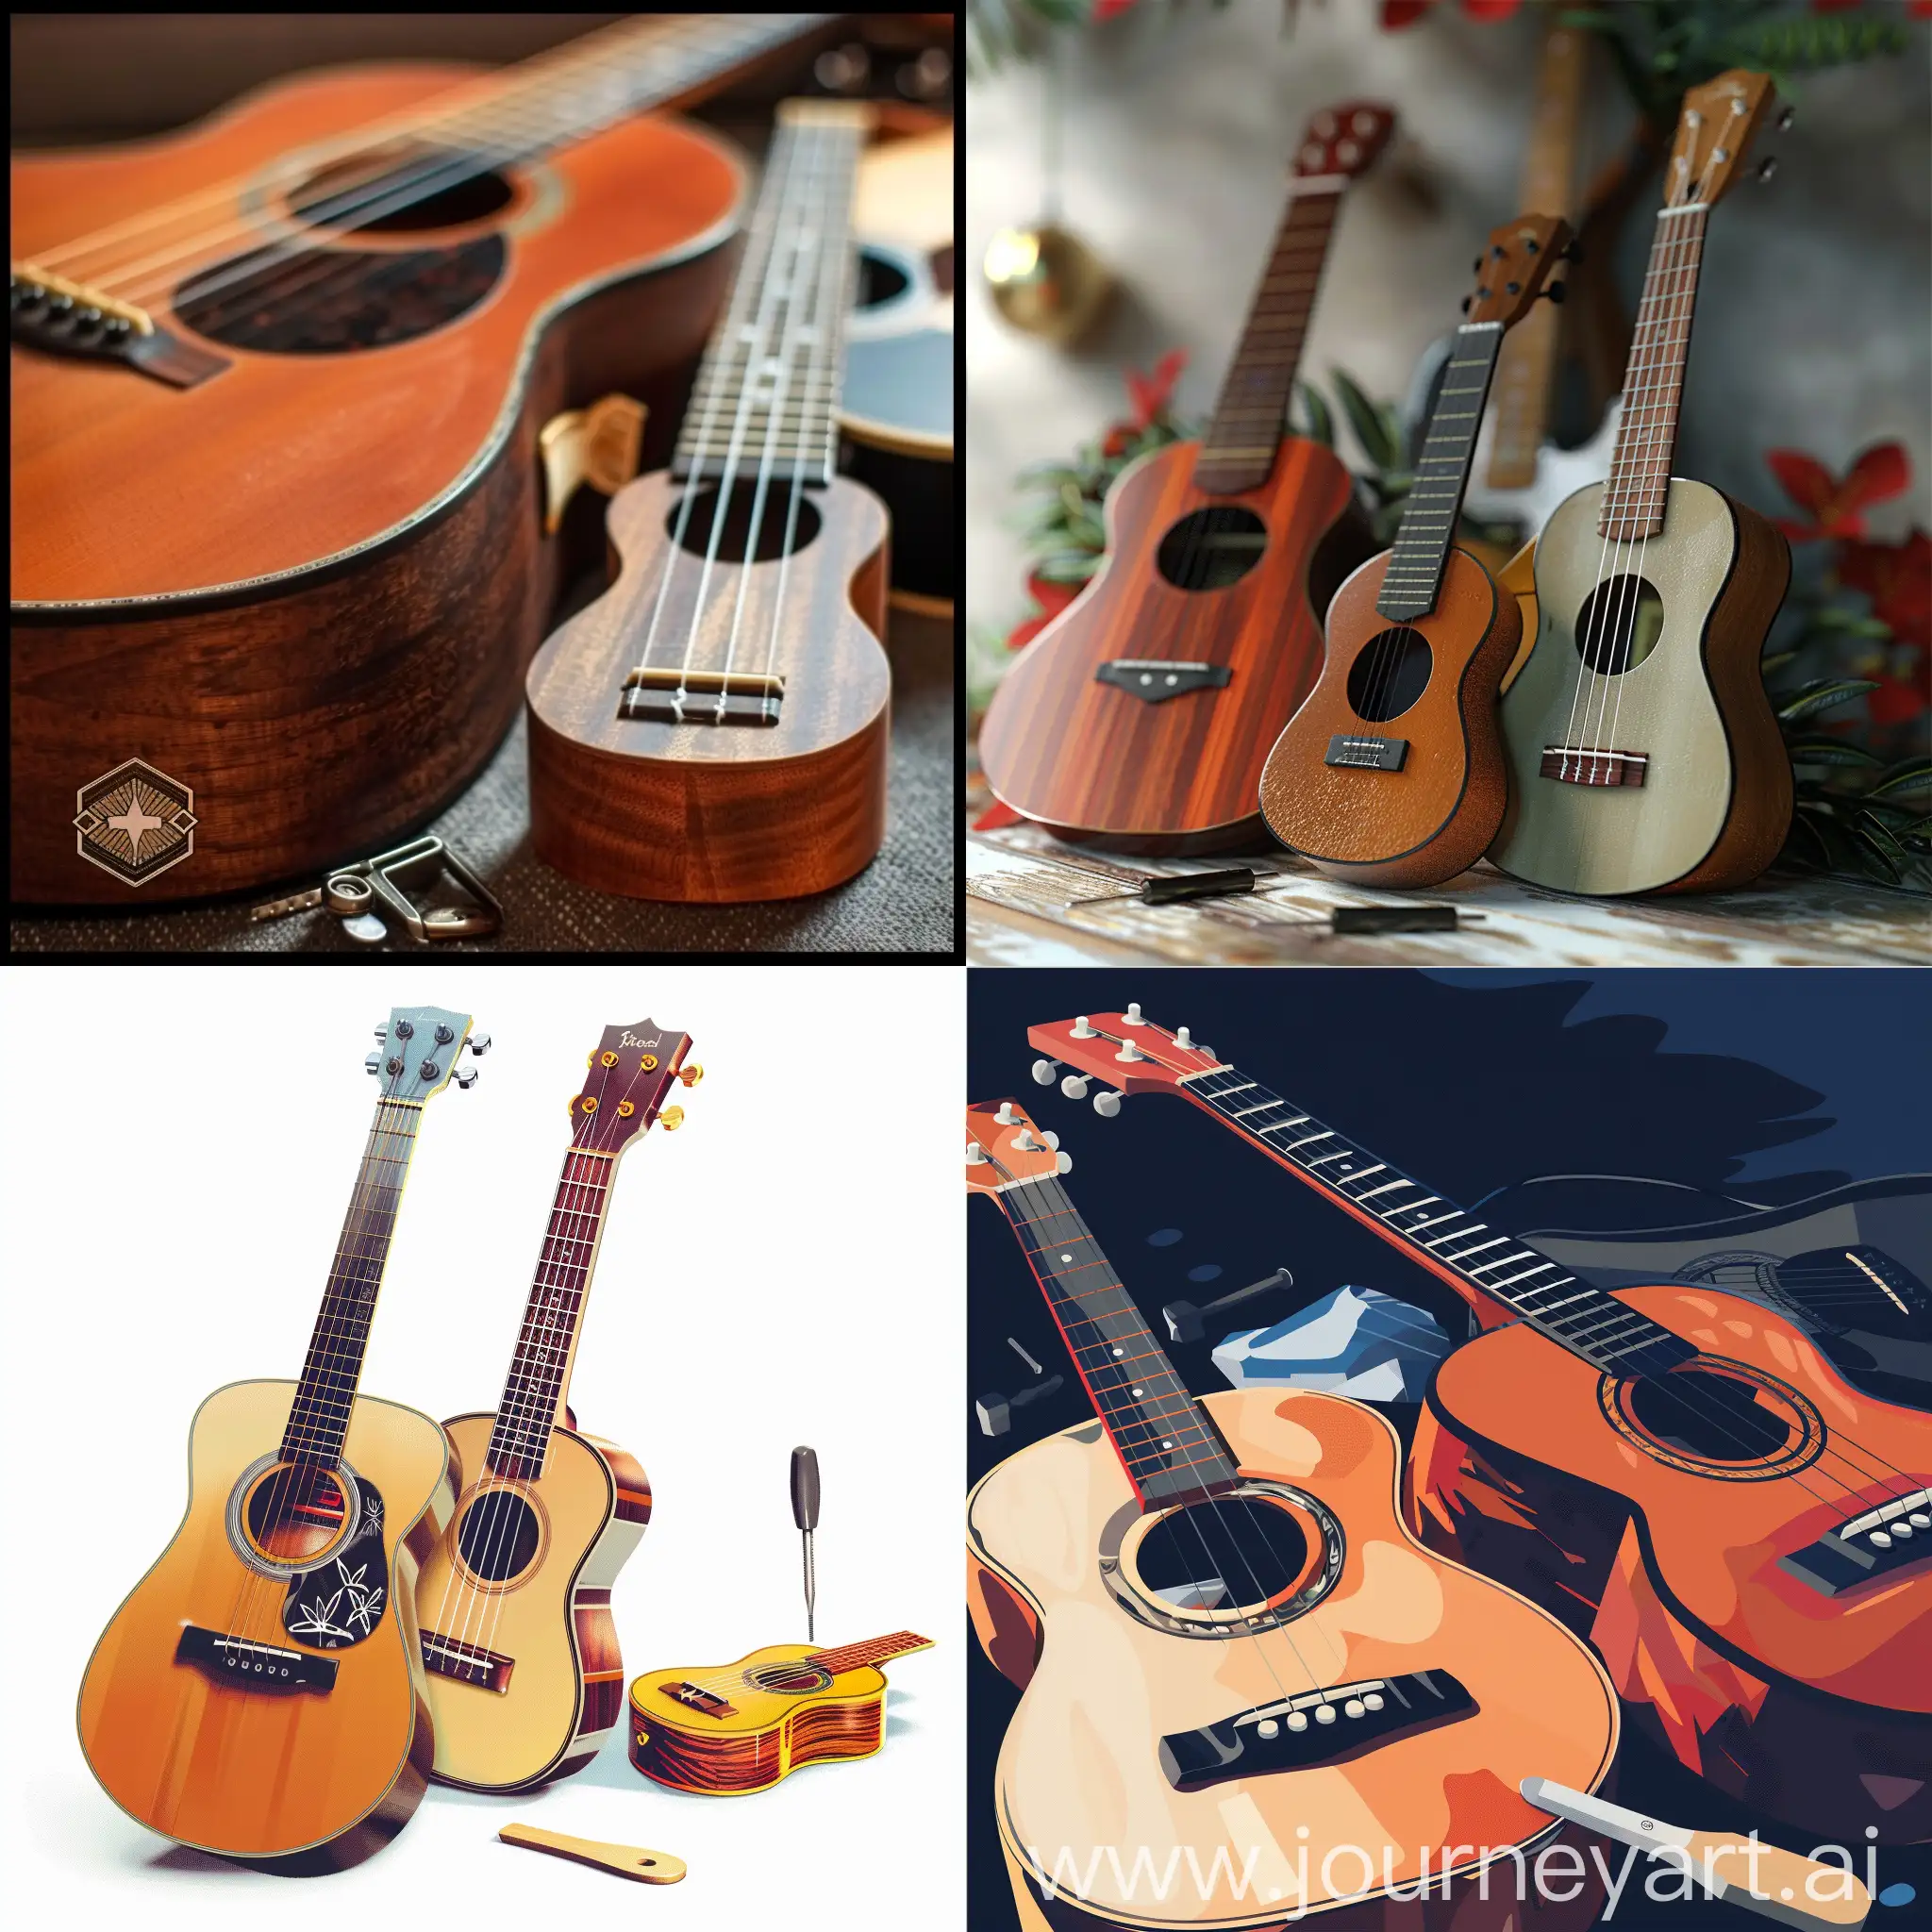 Acoustic-Guitar-and-Ukulele-Tutorial-Logo-Branding-Channel-on-YouTube